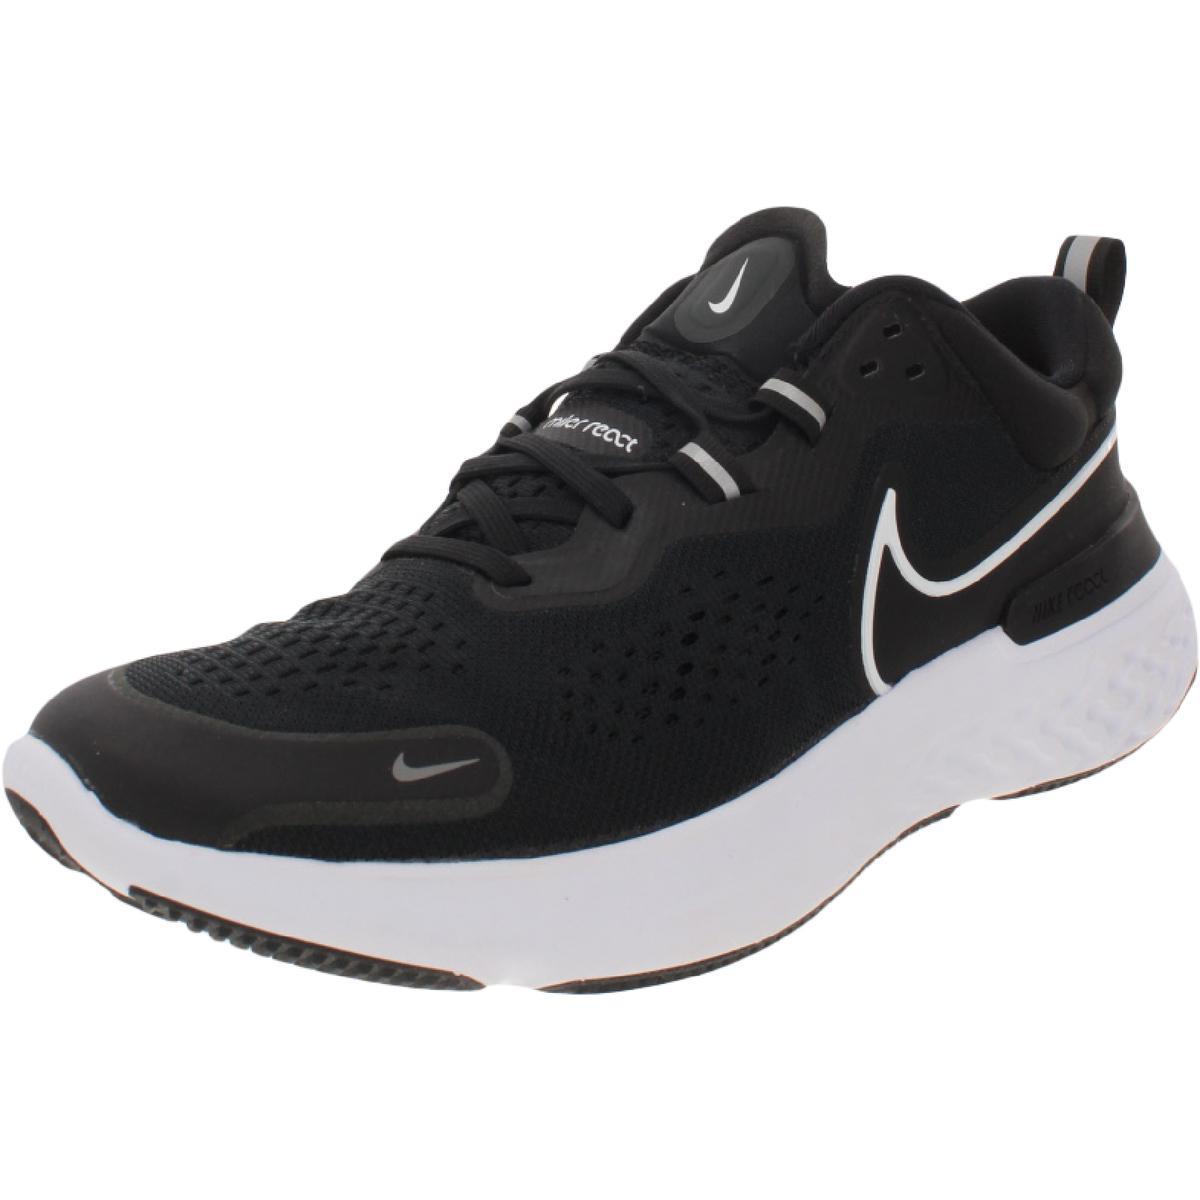 Nike Mens React Miler 2 Fitness Workout Running Shoes Sneakers Bhfo 5098 Black/White/Smoke Grey